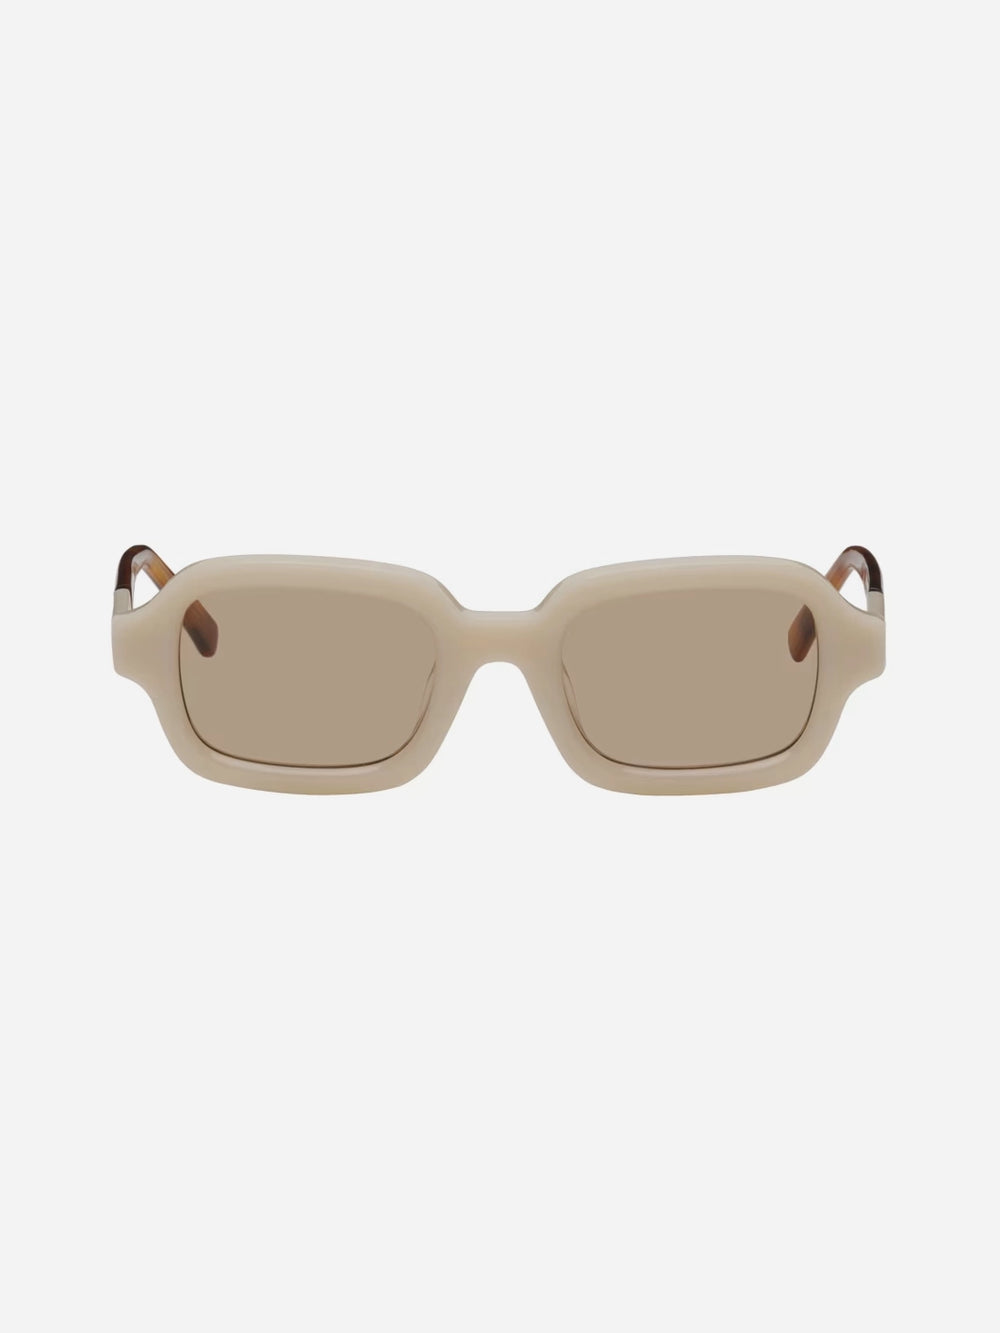 Cream/Brown Lens Shy Guy Bonnie Clyde Sunglasses